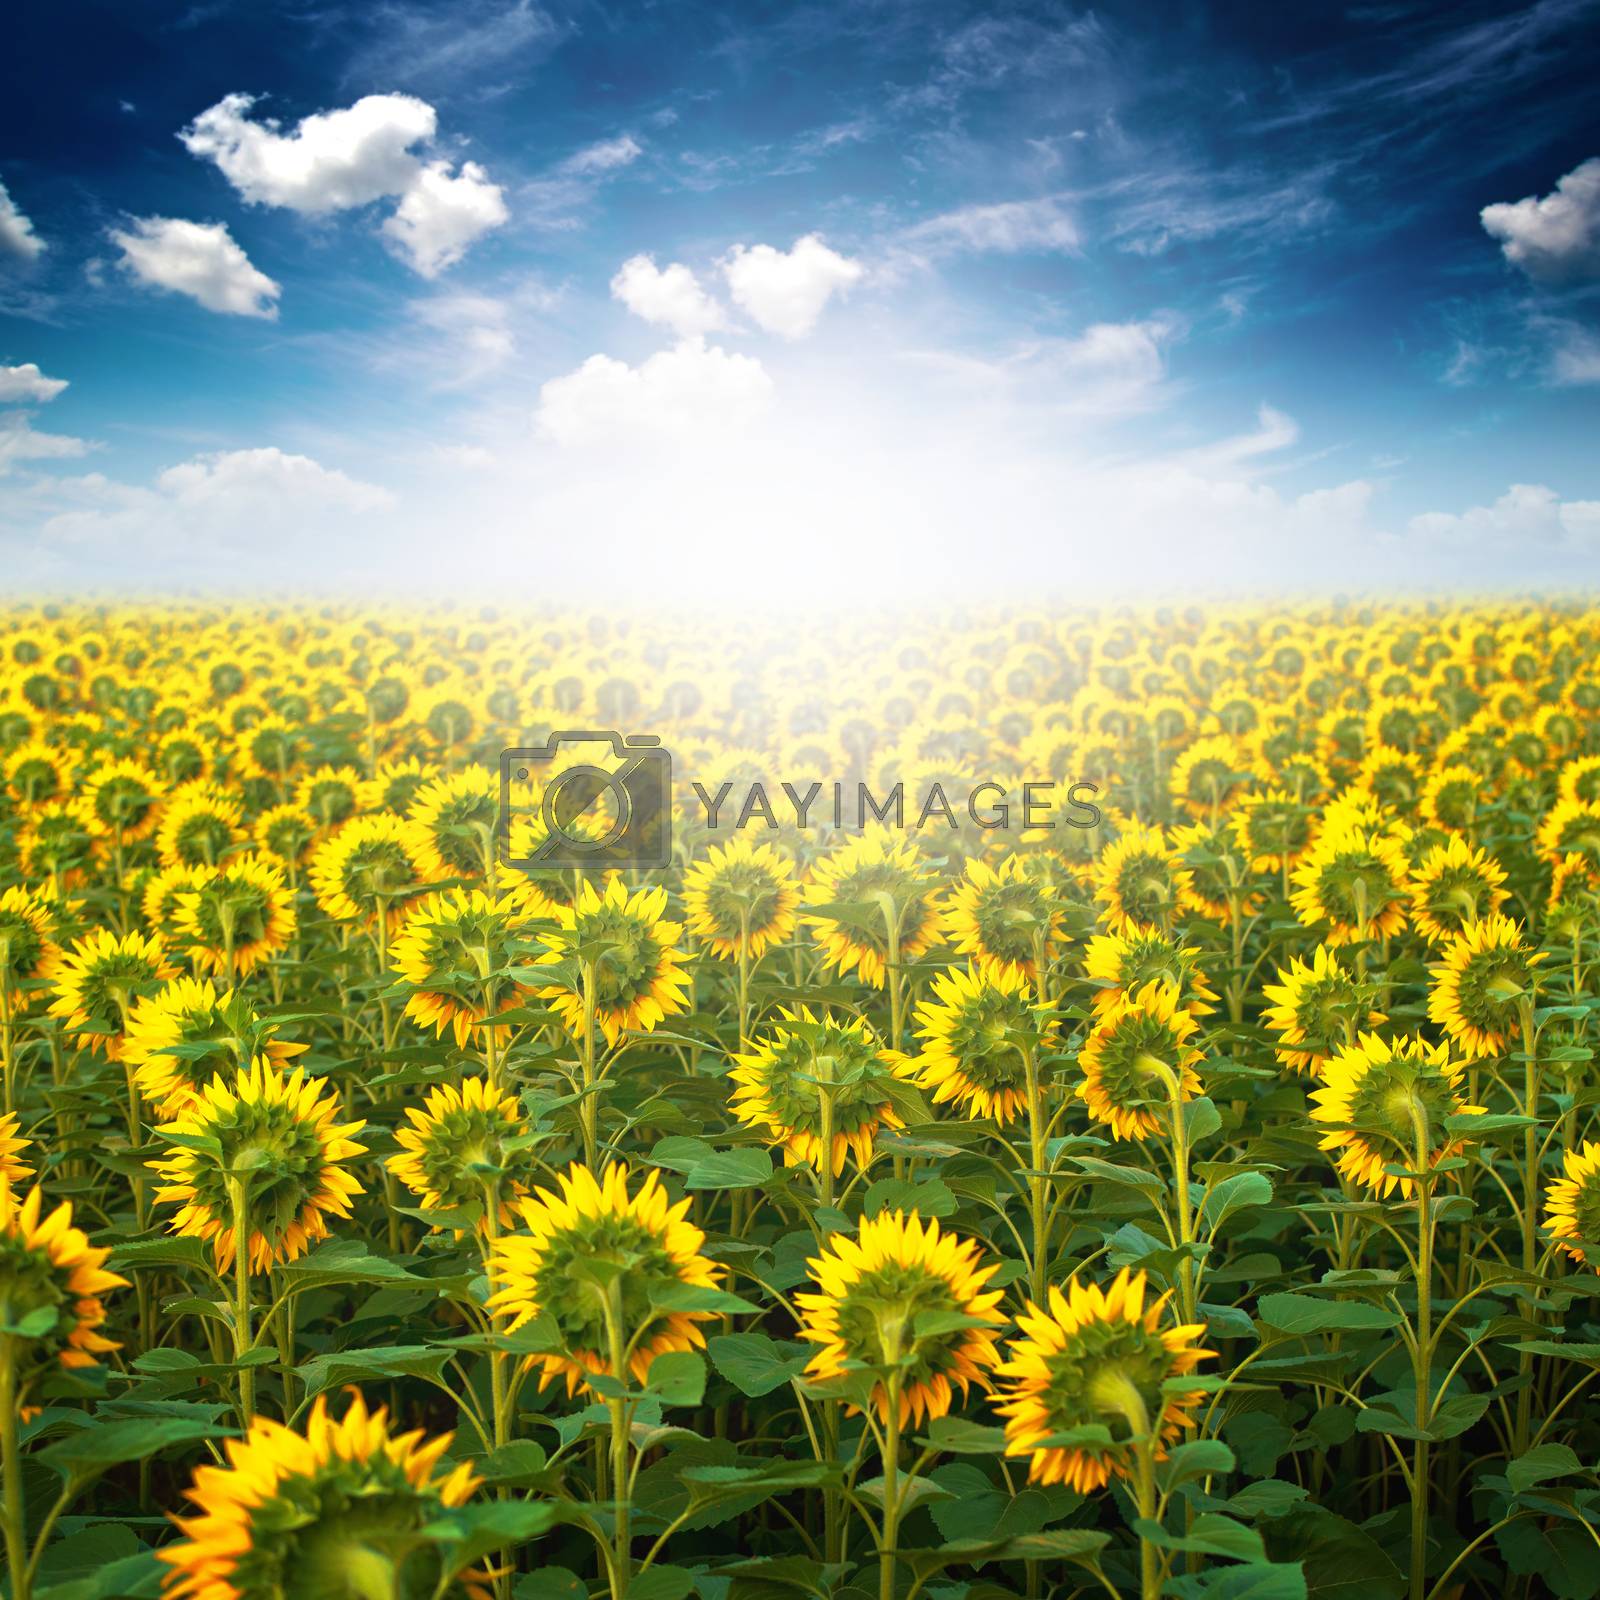 Royalty free image of Sunflower field by stevanovicigor